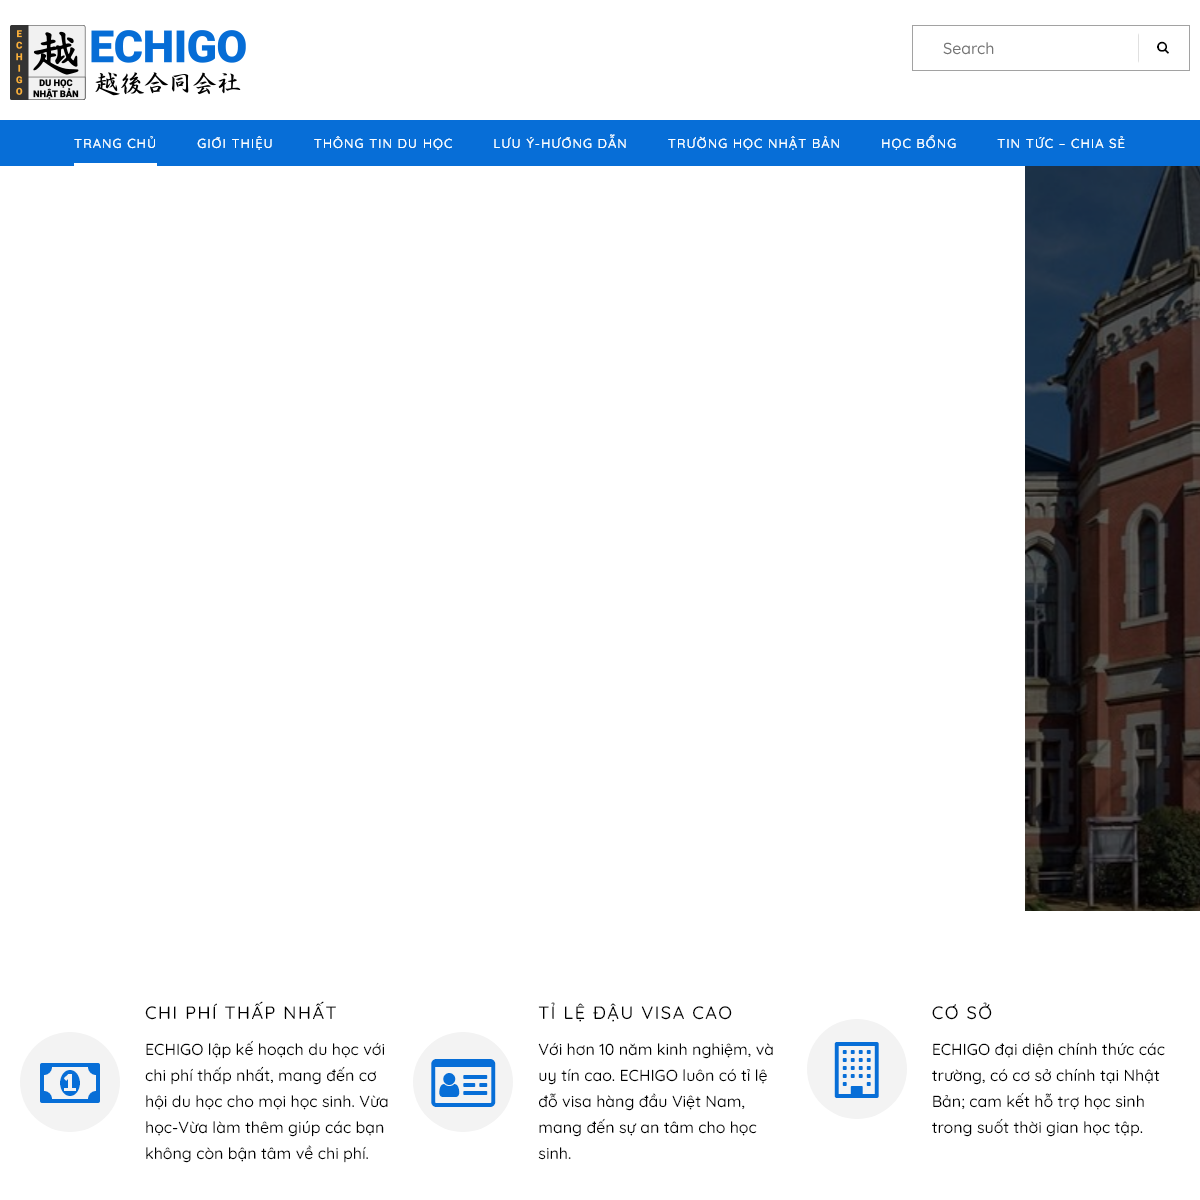 A complete backup of echigo.edu.vn